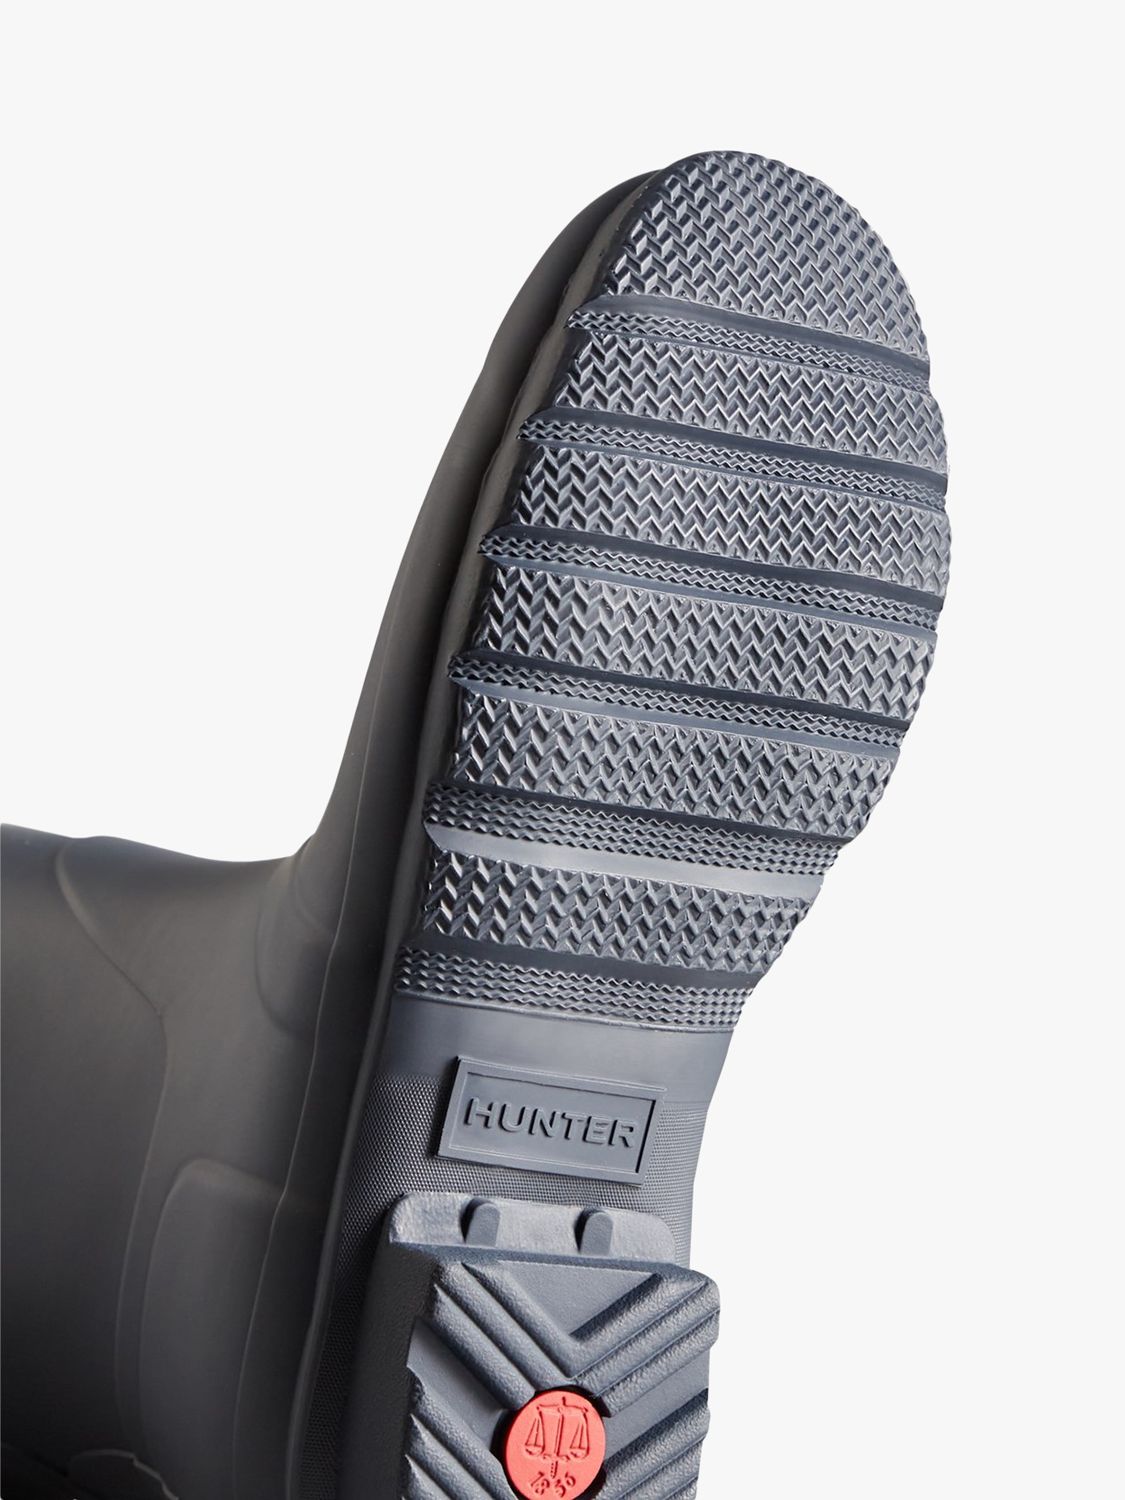 Buy Hunter Short Wellington Boots, Navy Online at johnlewis.com